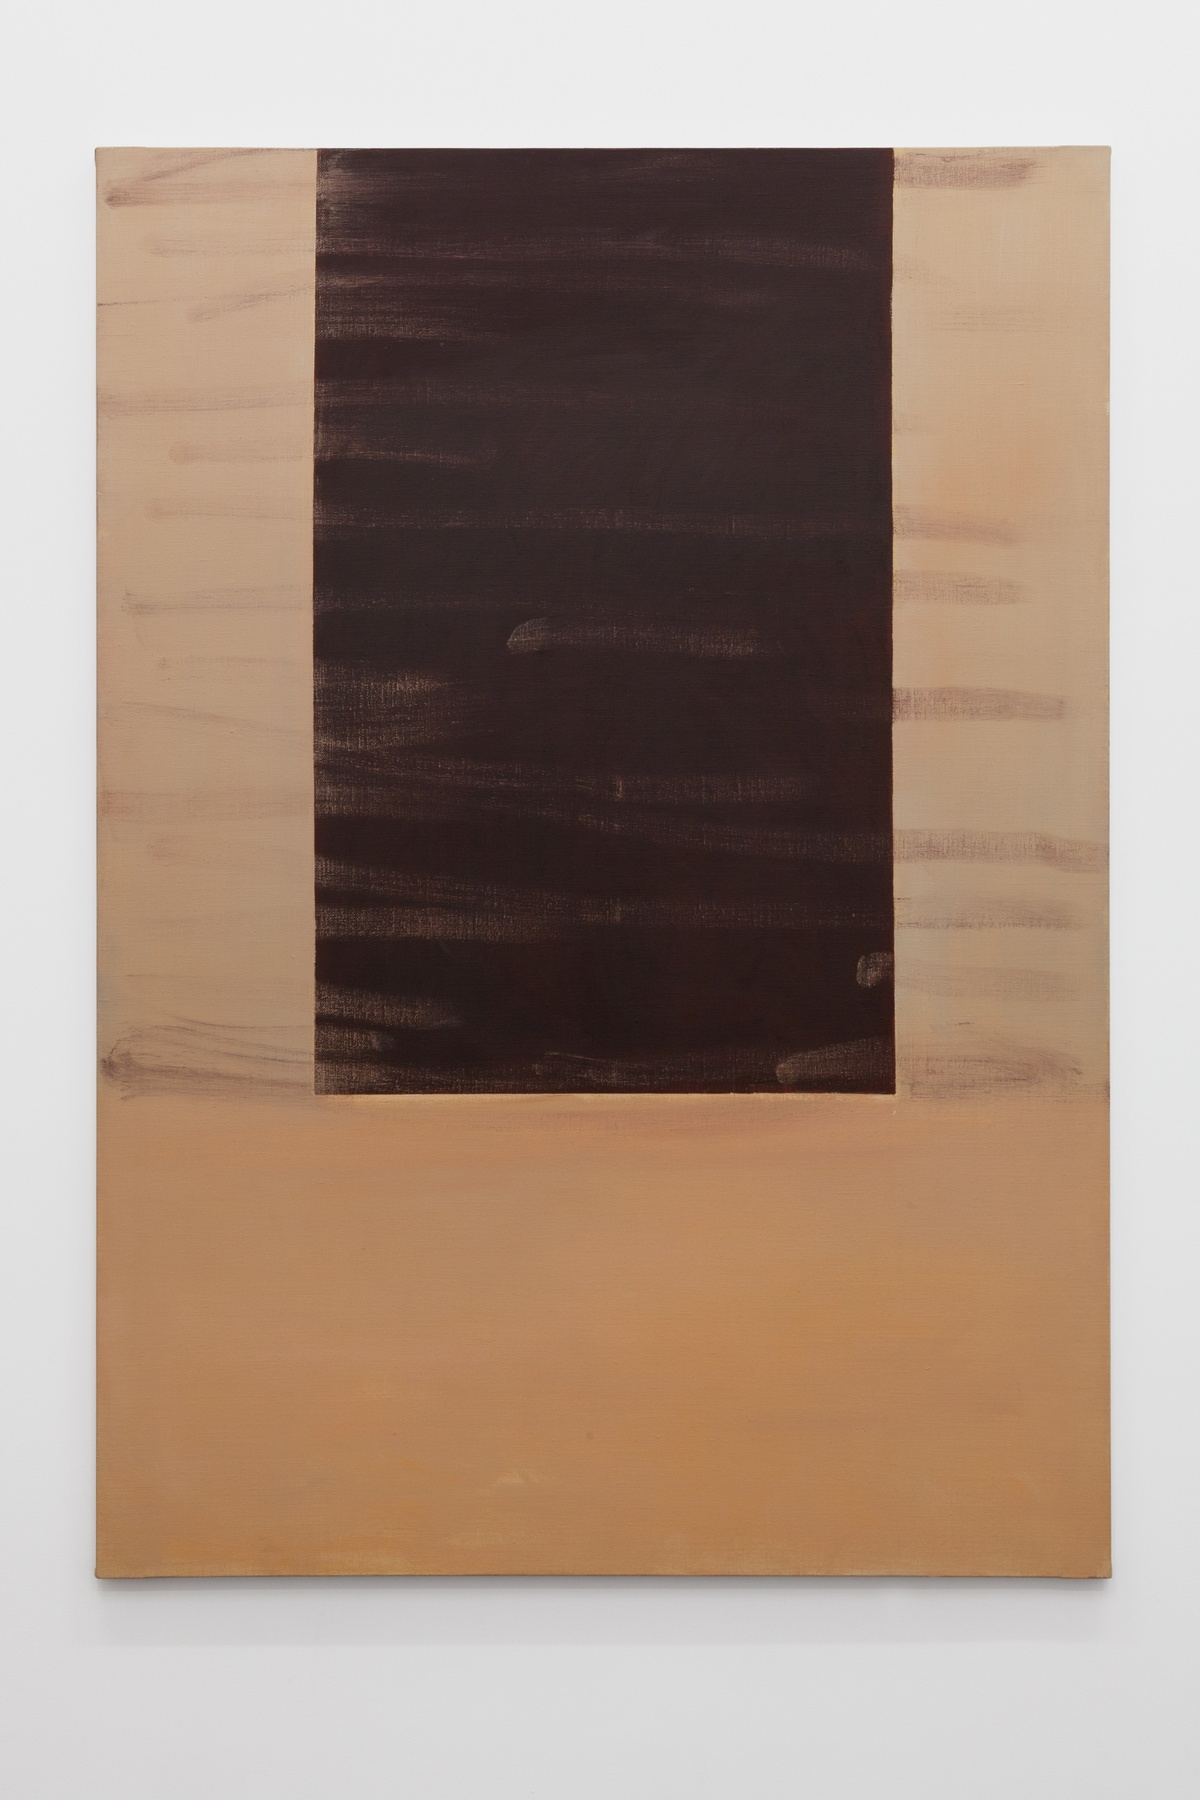 Raoul De KeyserUntitled, 1990oil on canvas167 x 124 cm | 65 3/4 x 48 3/4 in